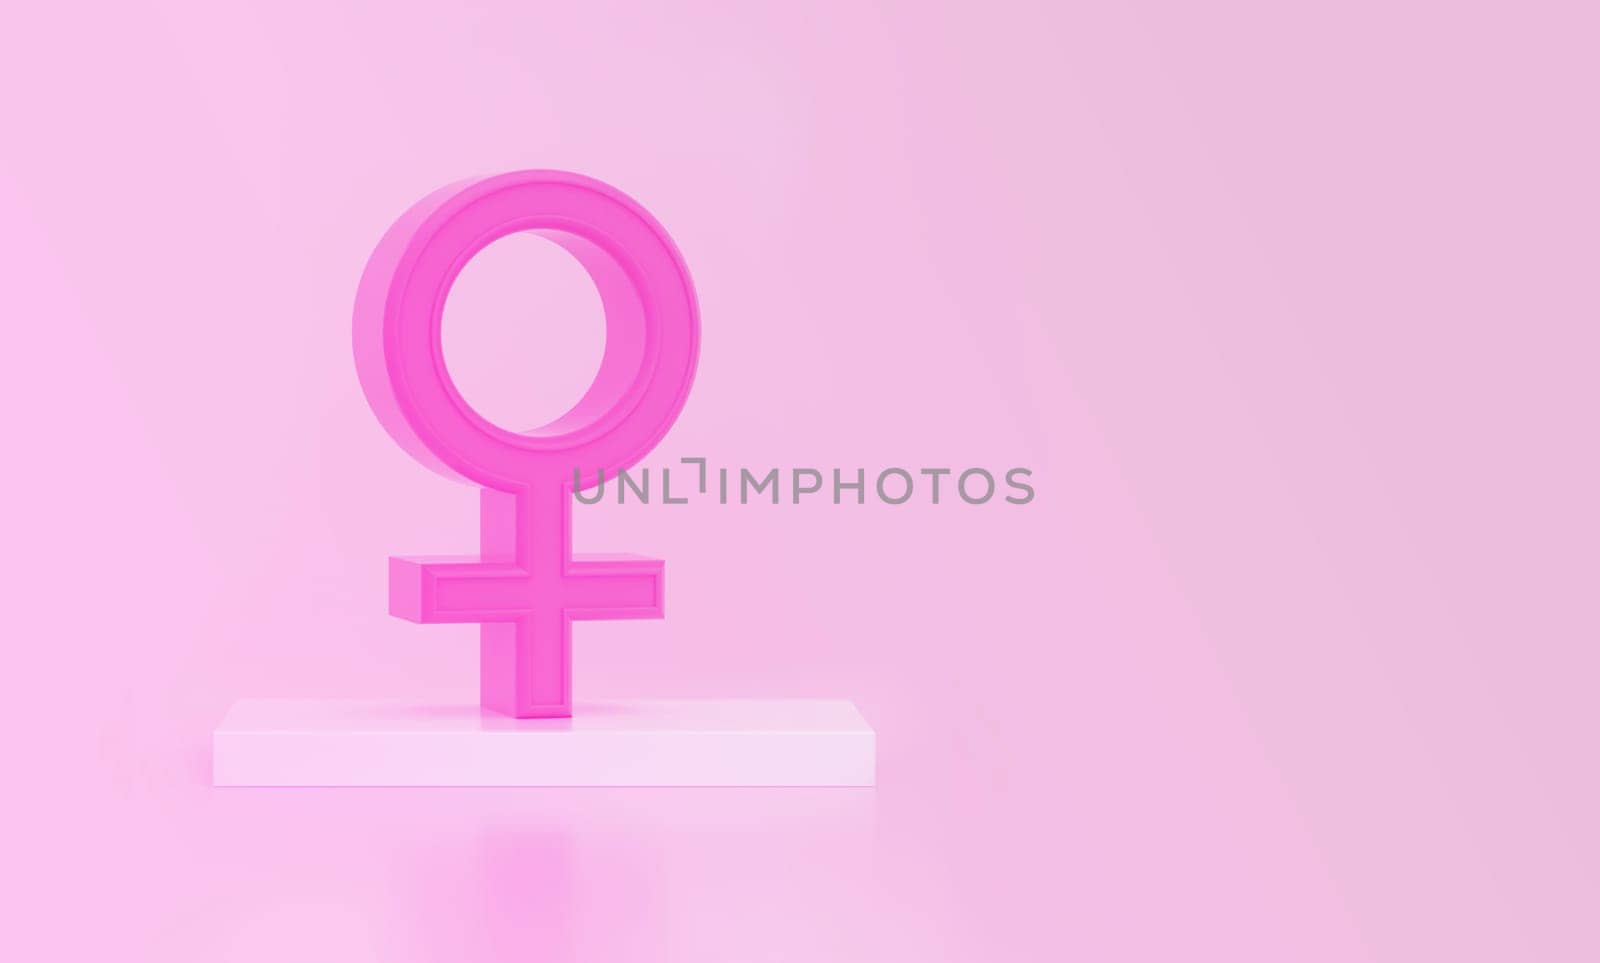 Female symbol on podium, 3D illustration. Women's equality rights. International Women's Day.